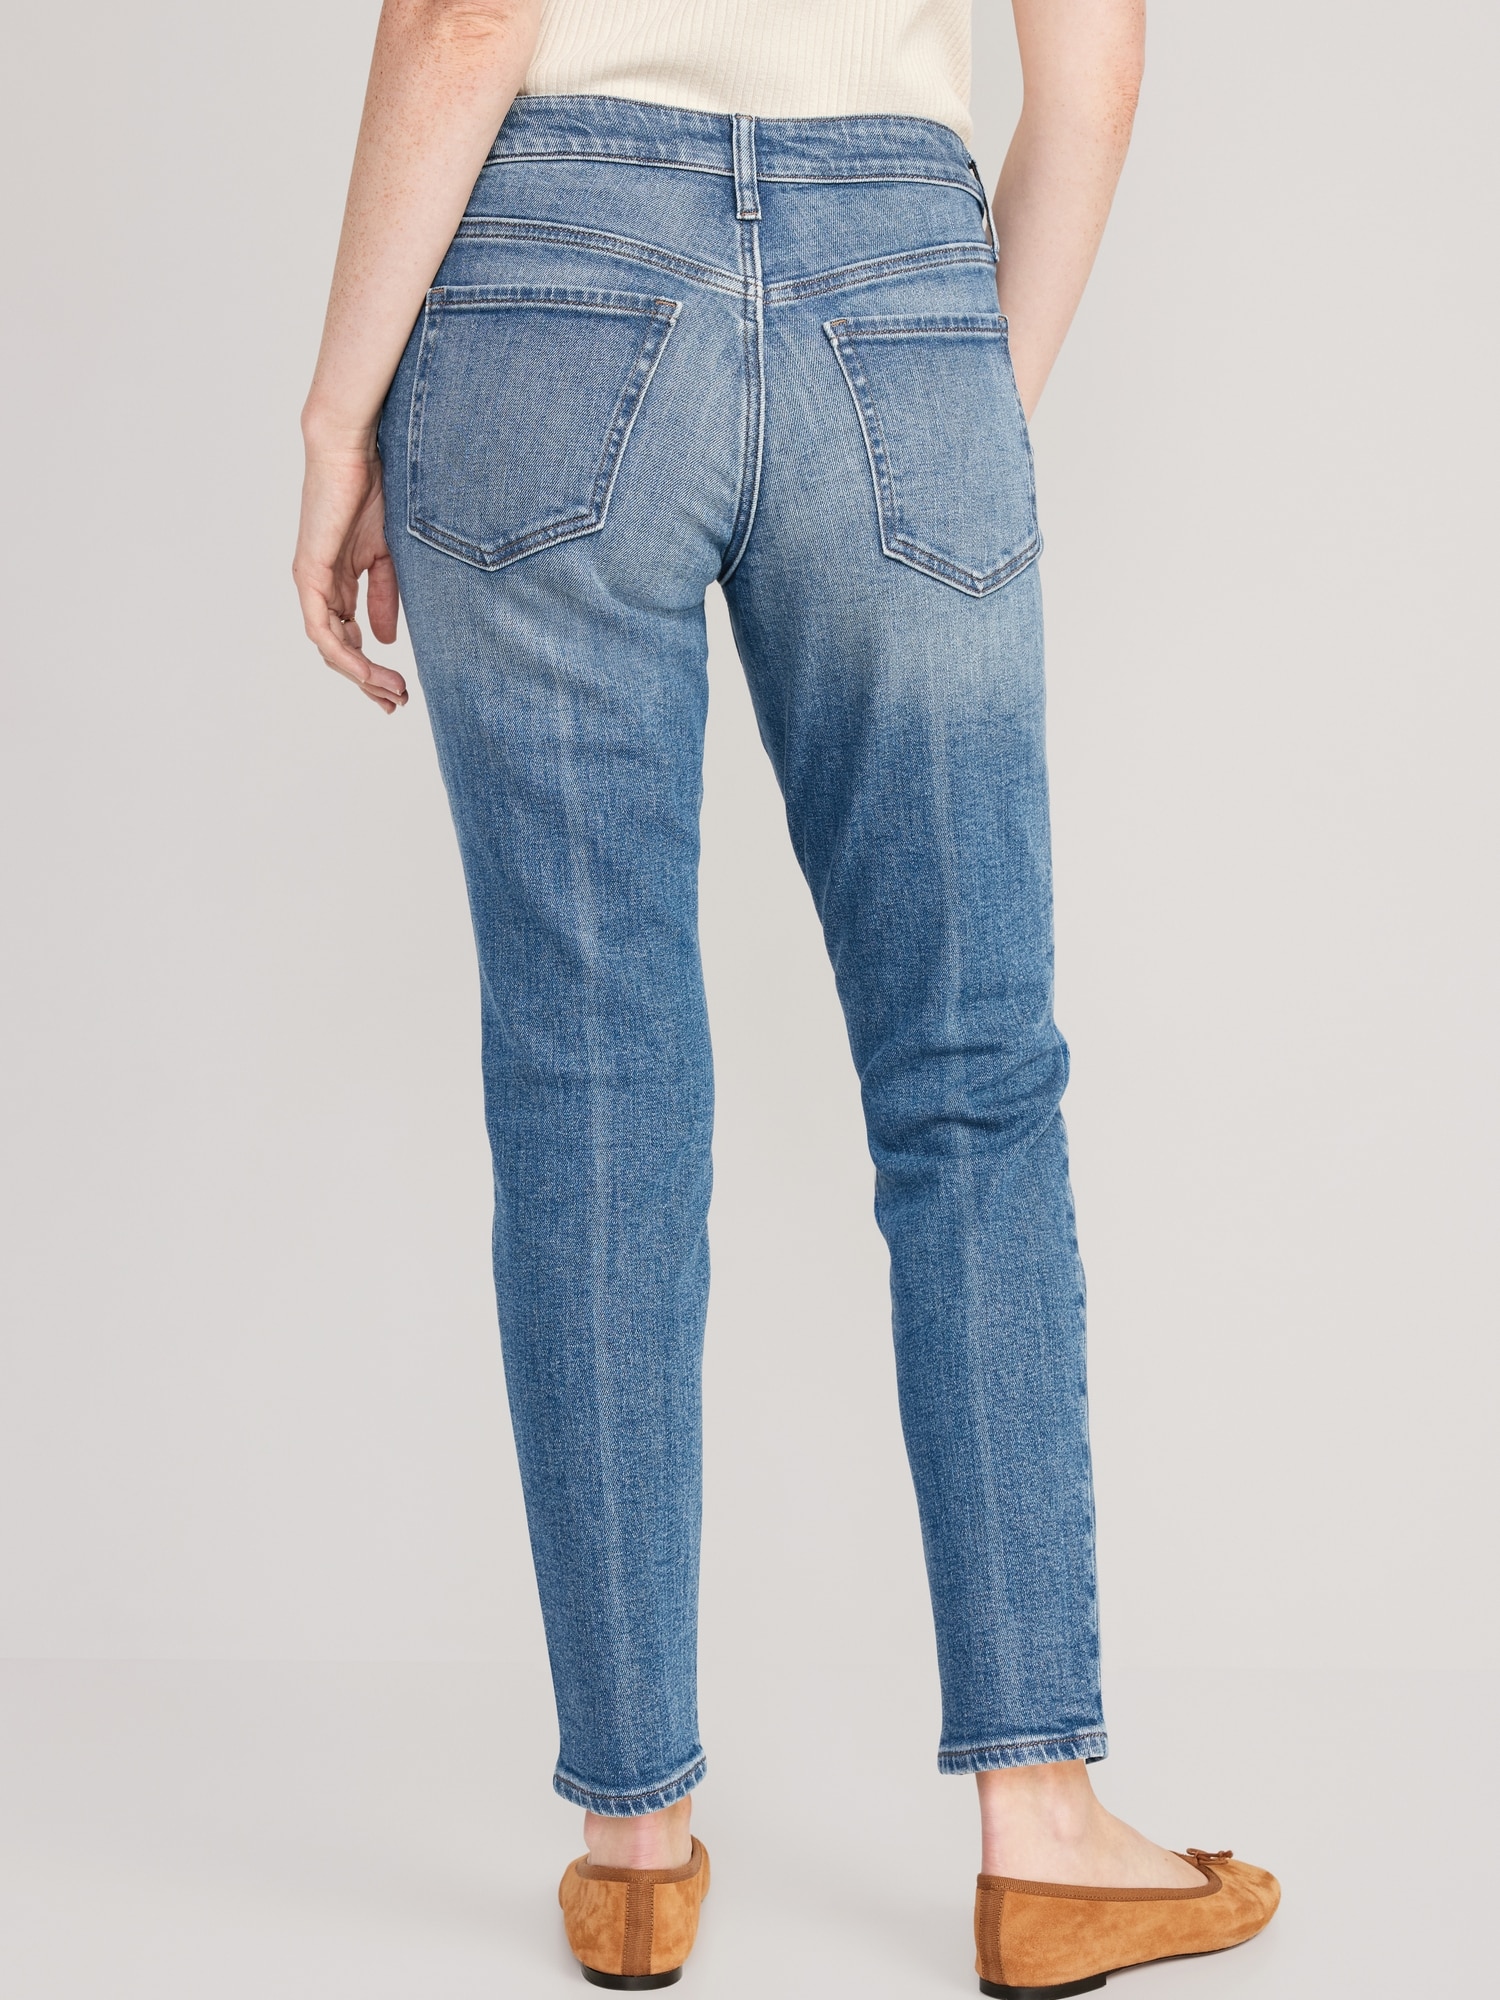 Cash Blue Mid Rise Straight Fit Jeans